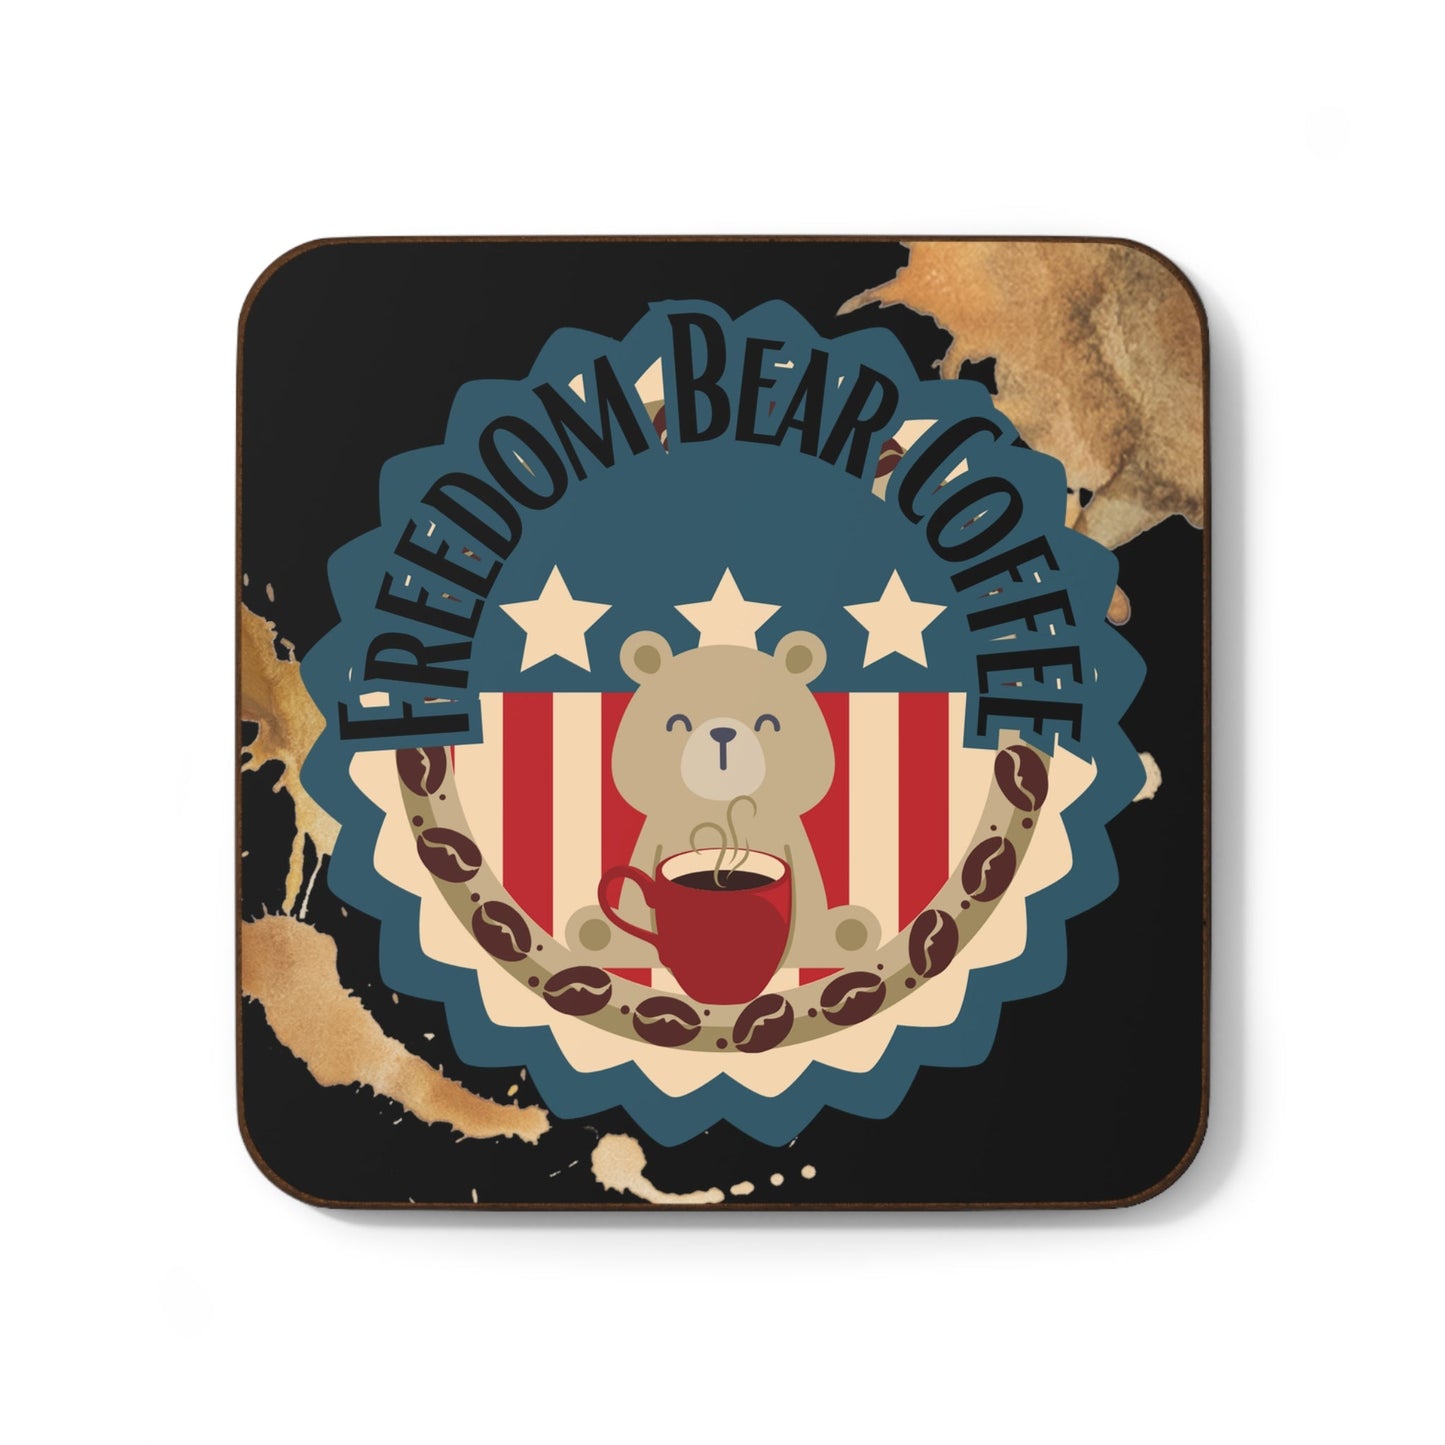 Freedom Bear Coffee Hardboard Back Coaster - From Freedom Bear Coffee - Just $4.99! Shop now at Freedom Bear Coffee